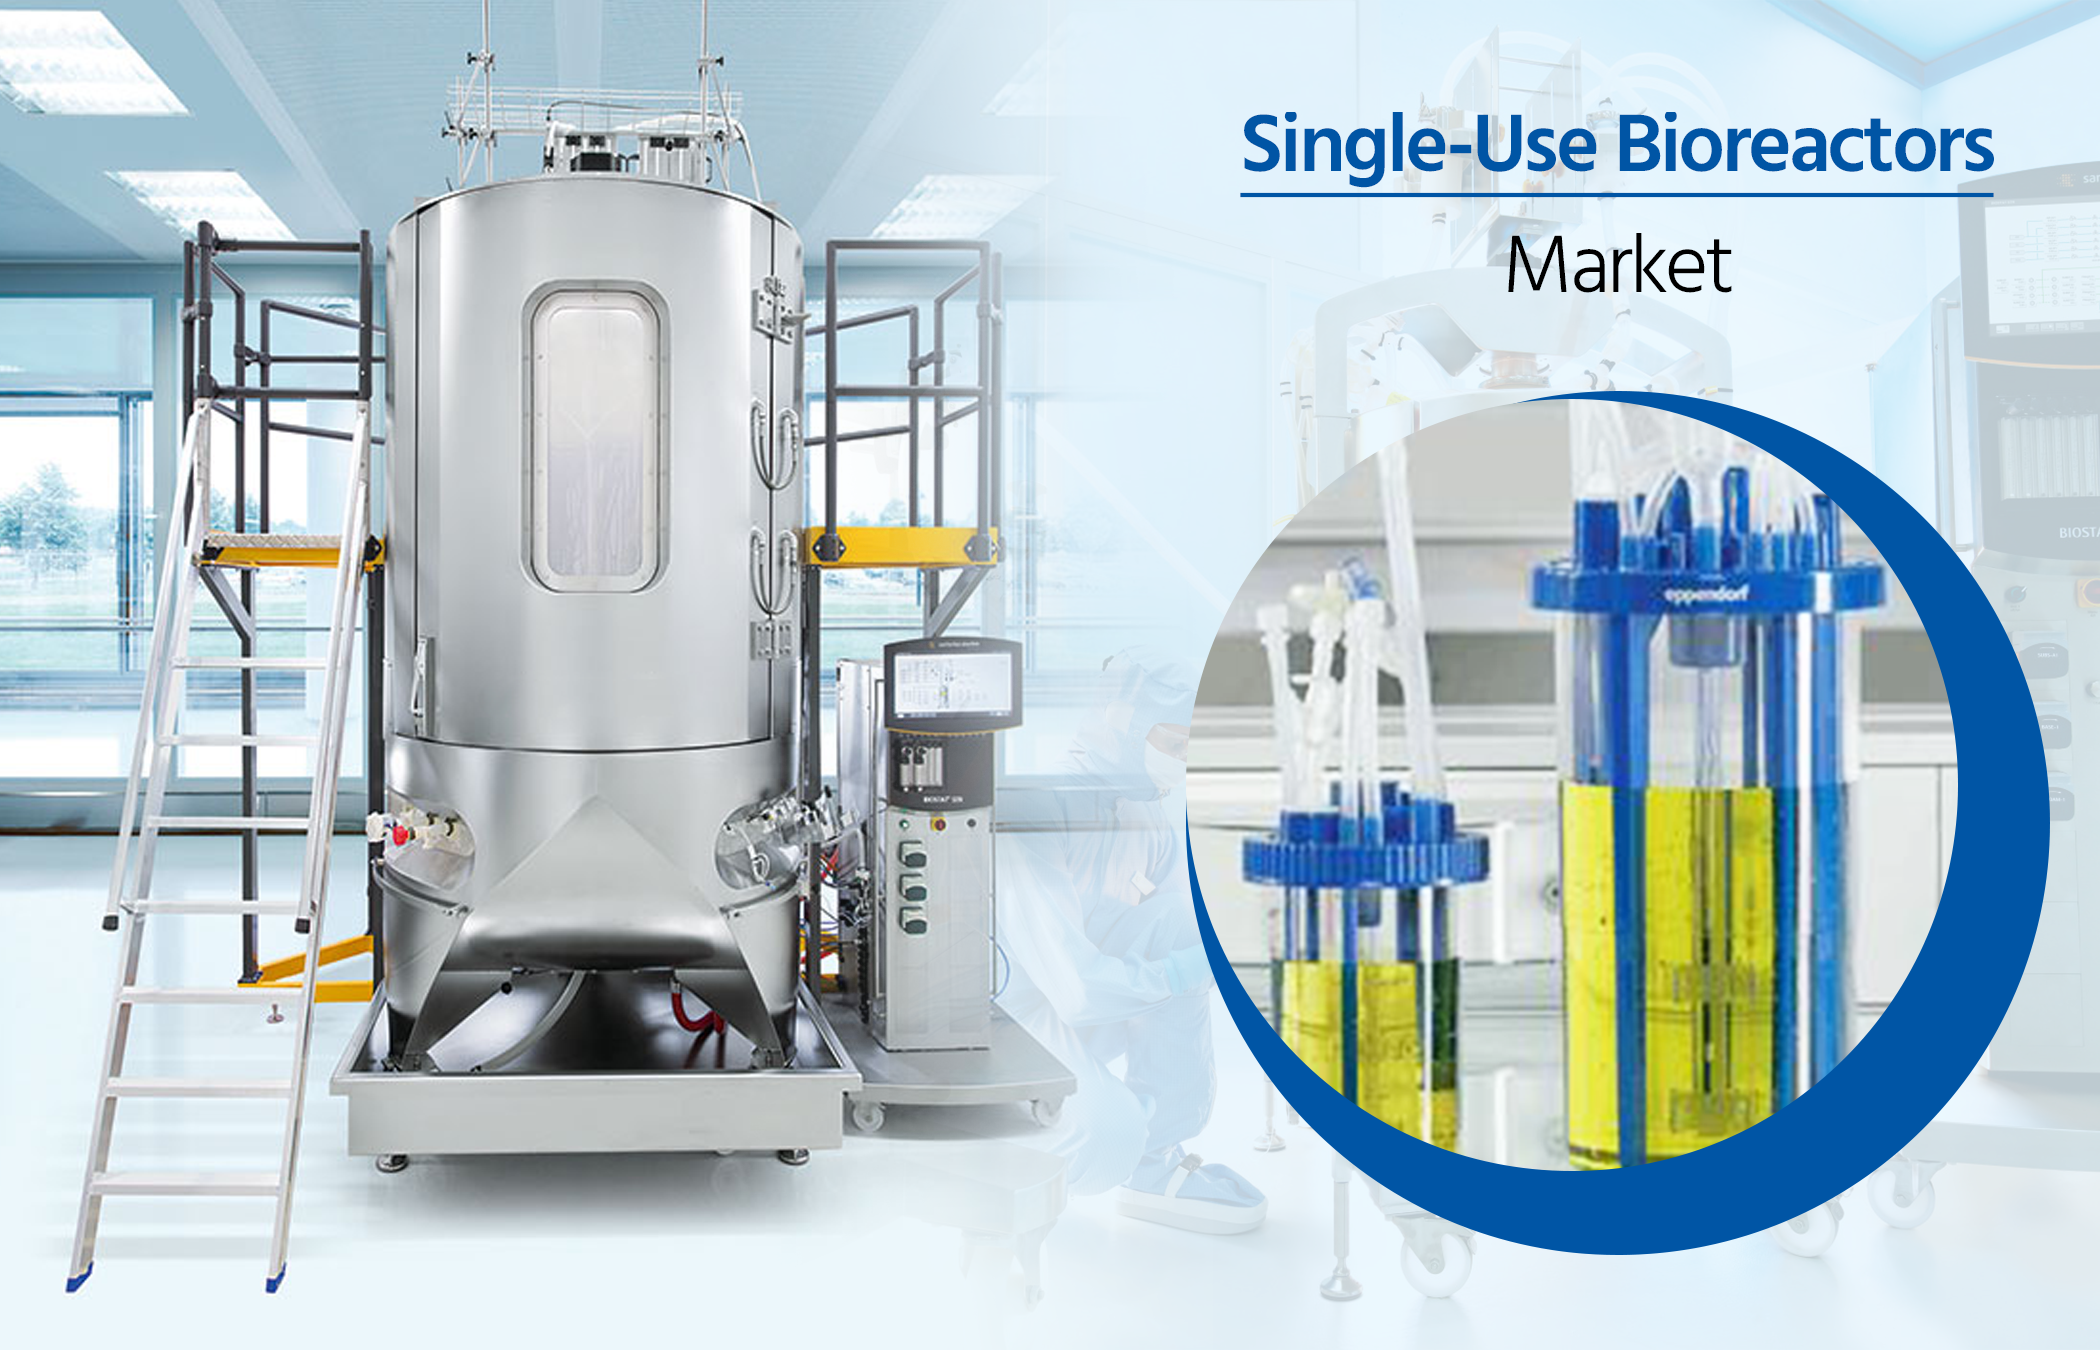 Single-use Bioreactors Market Growth by Top players 2019-2030 | Pierre Guérin, Cellexus Ltd, Sartorius AG, Merck KGaA, Celltainer